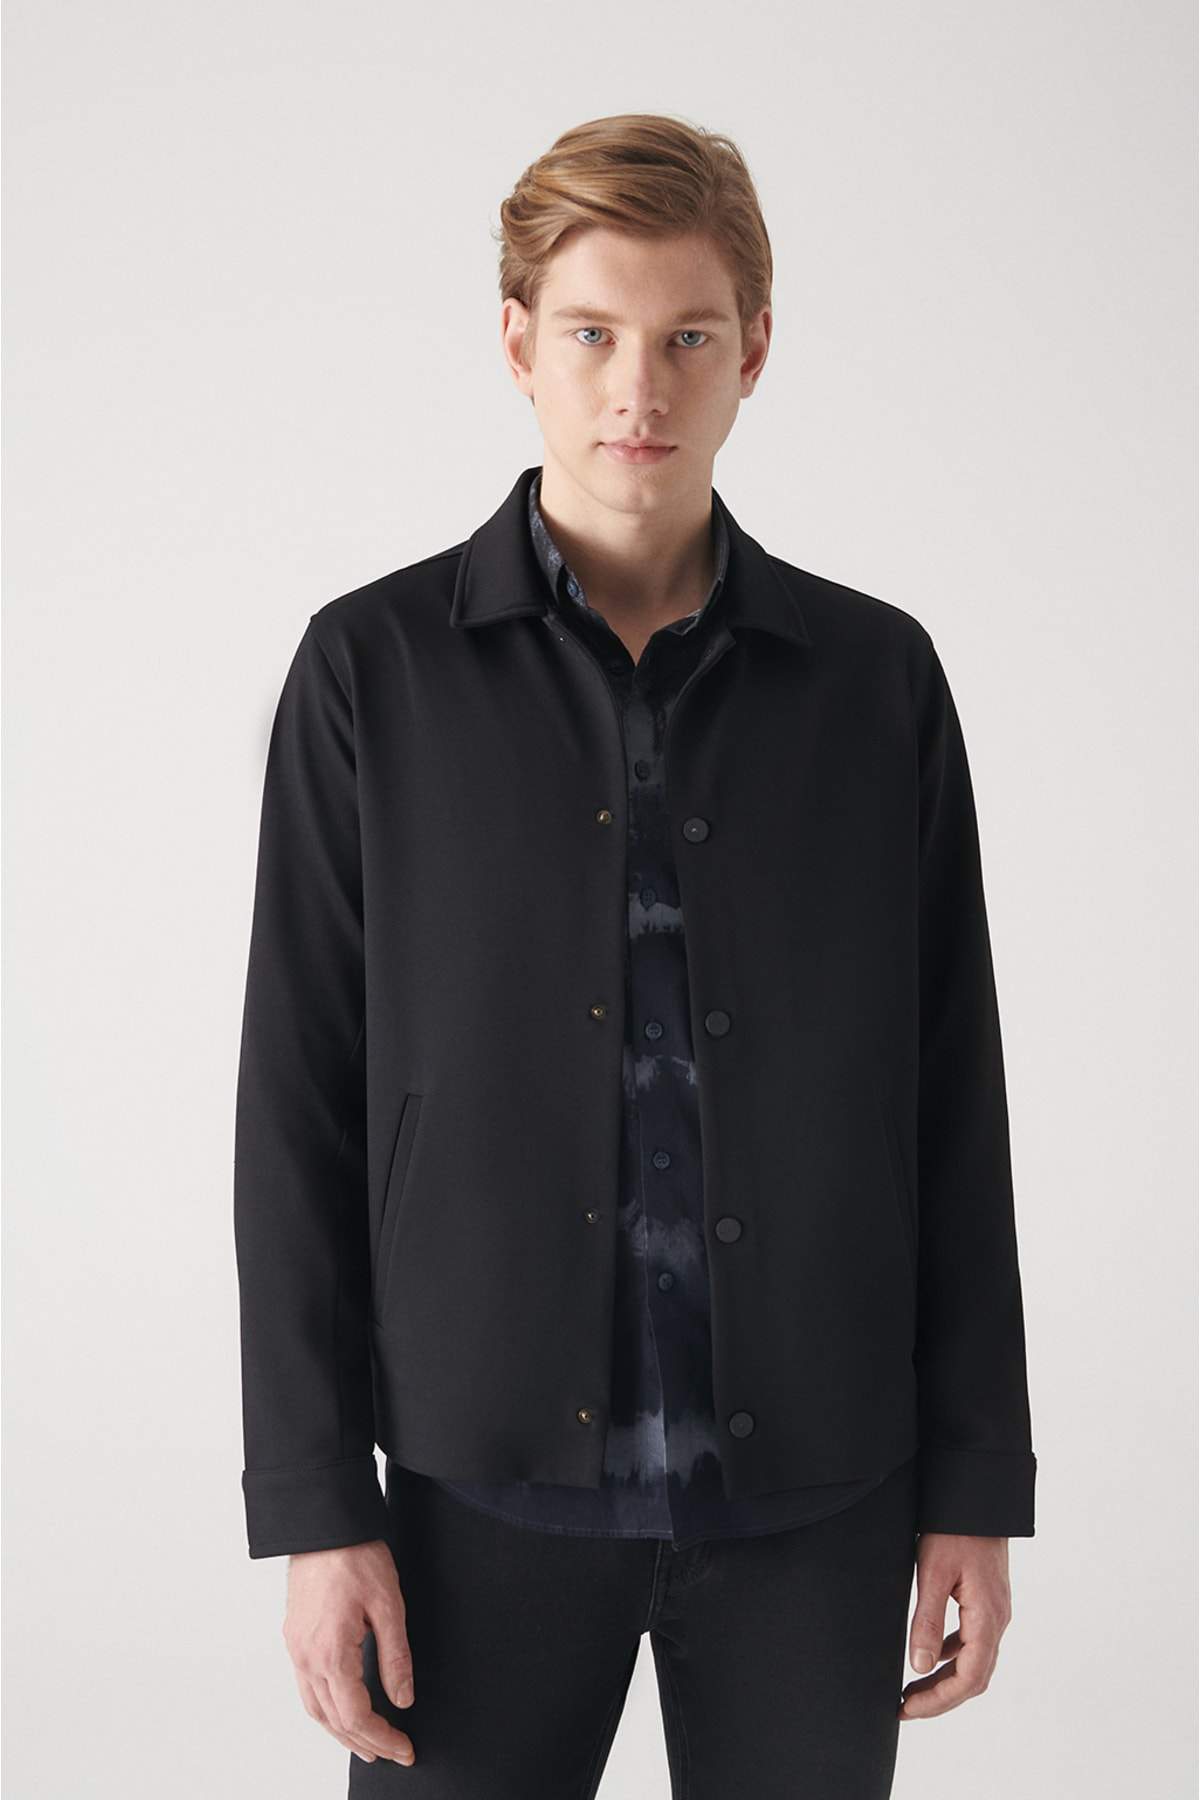 mens-black-classic-collar-snapped-jacket-coat-a22y6030